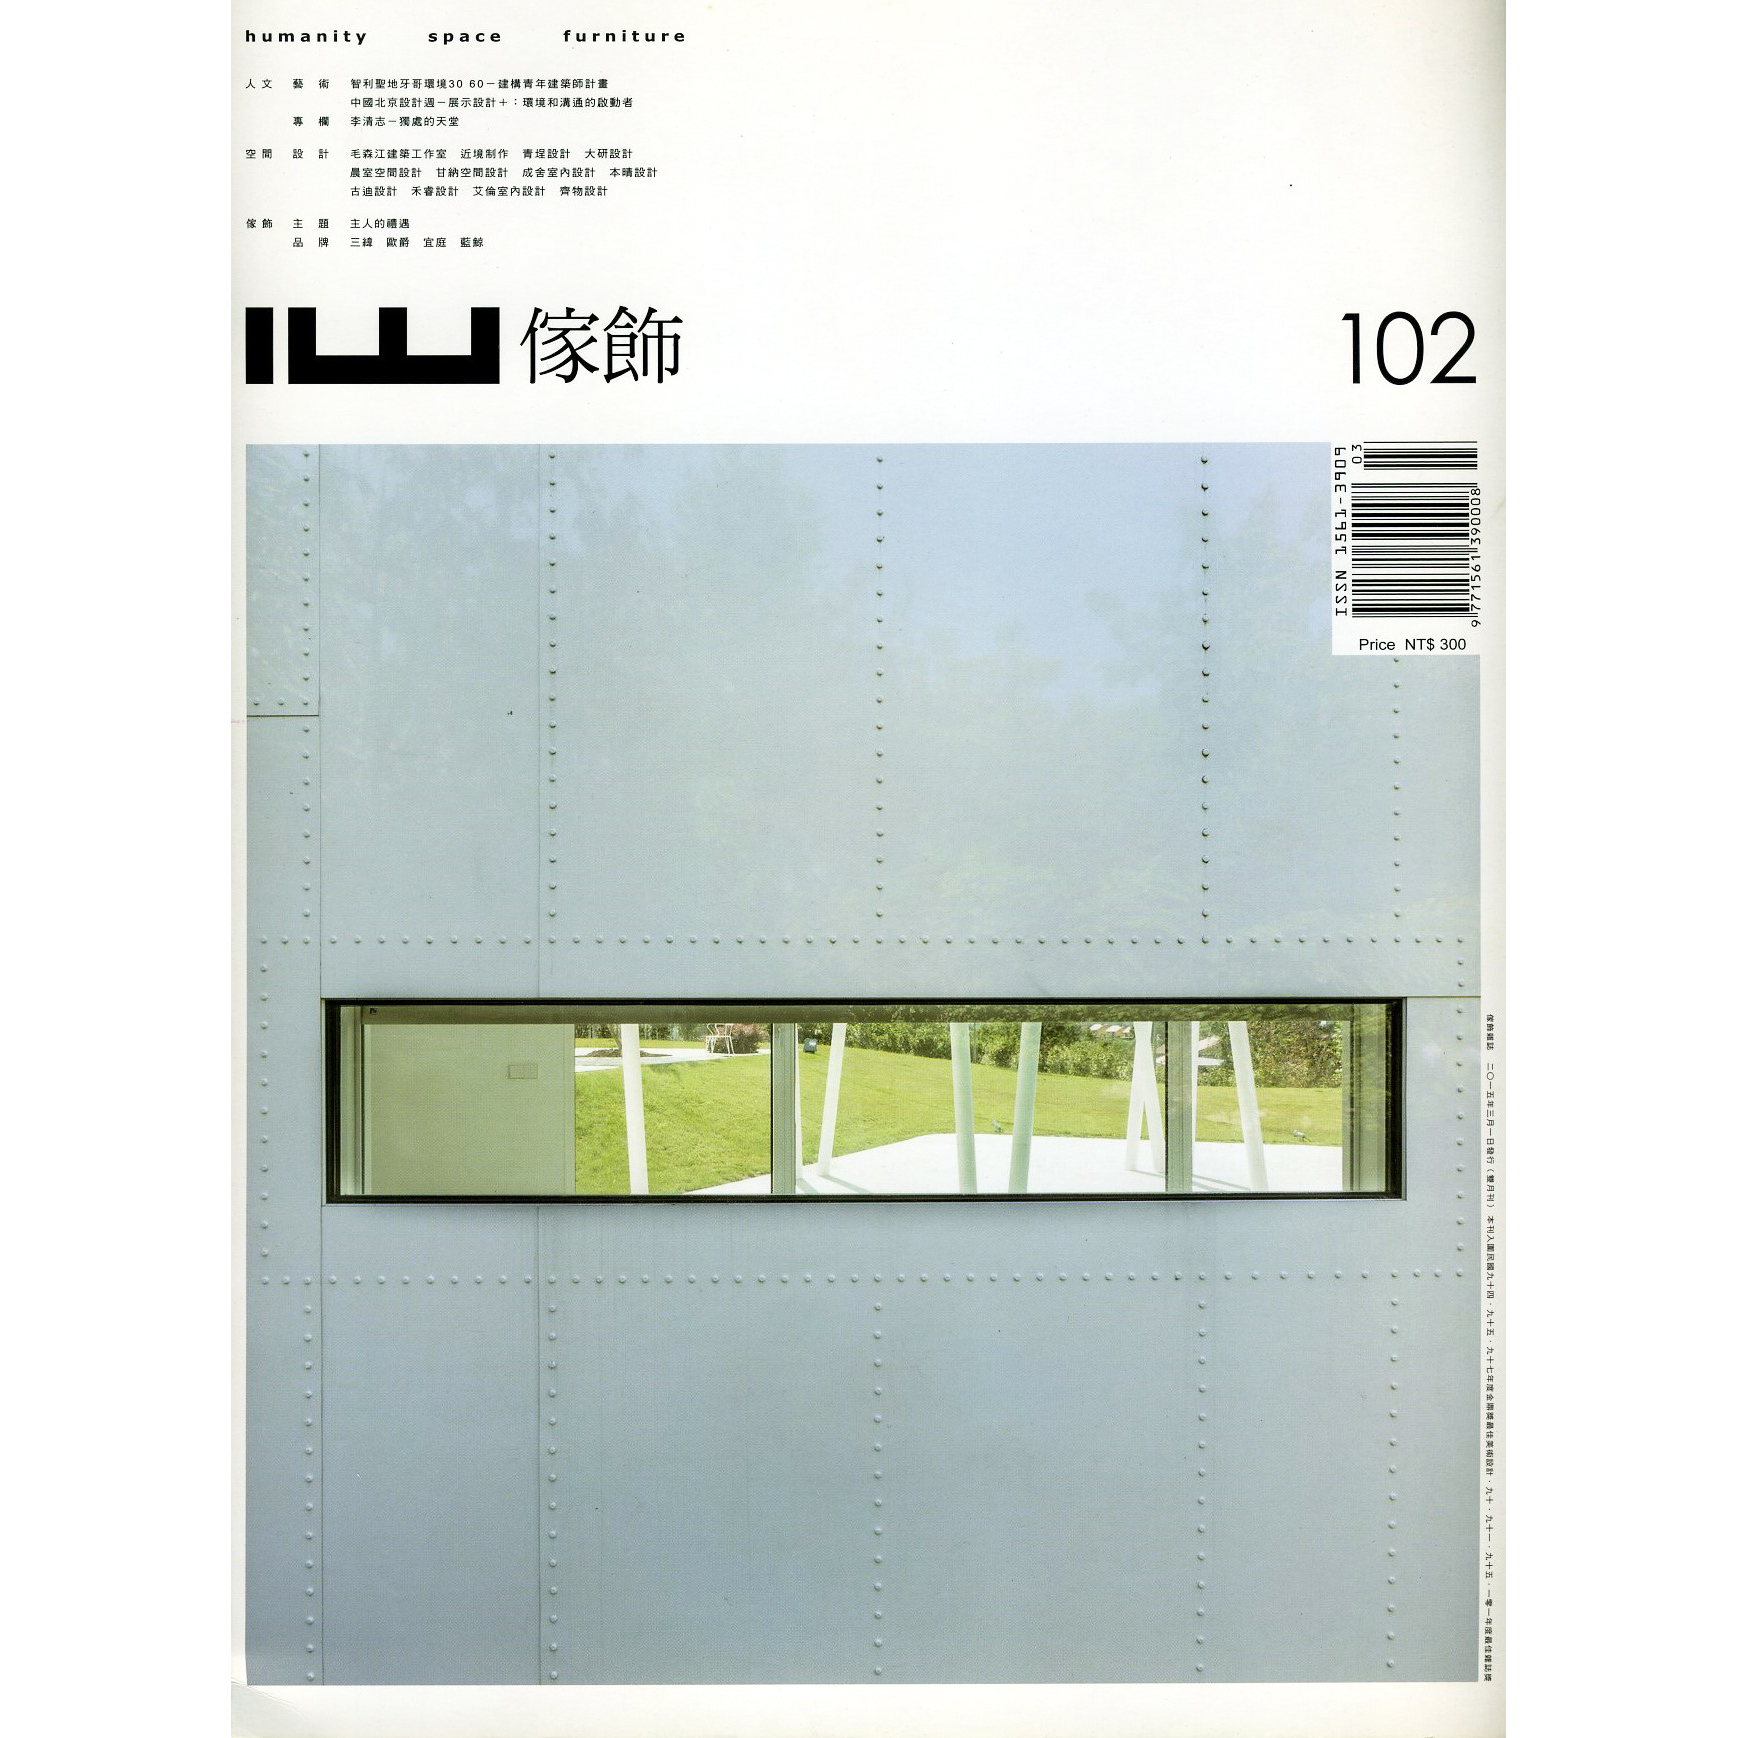 IW nº 102. 2015 (Printed Publication)